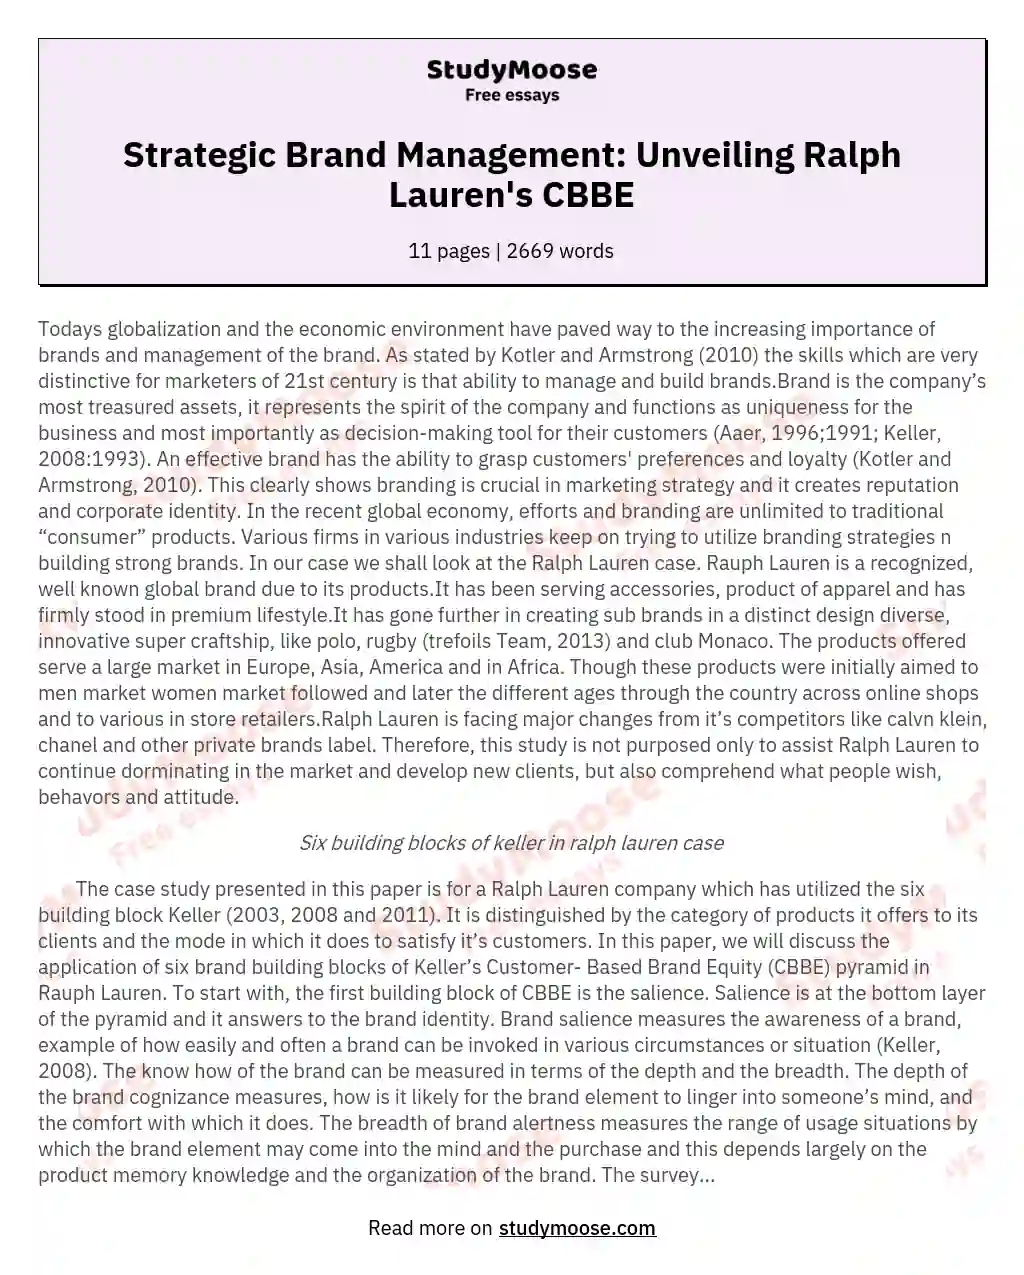 Strategic Brand Management: Unveiling Ralph Lauren's CBBE essay